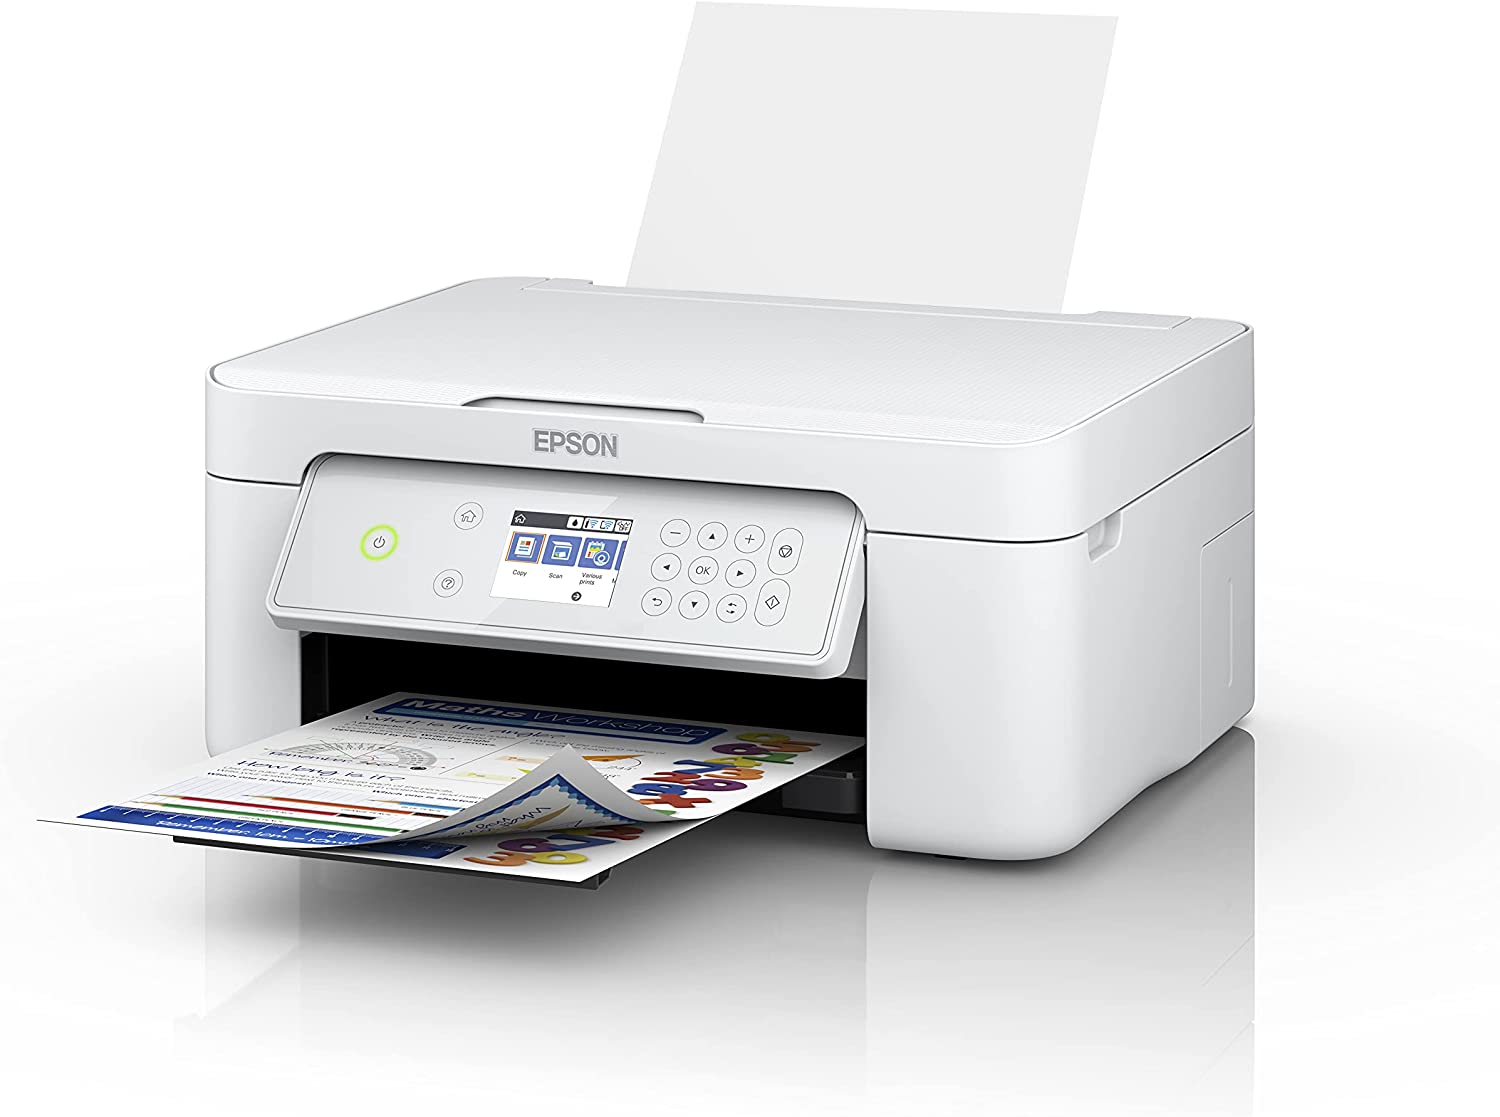 Epson XP-4150/XP-4155/XP-4200 Series Printer - Featured